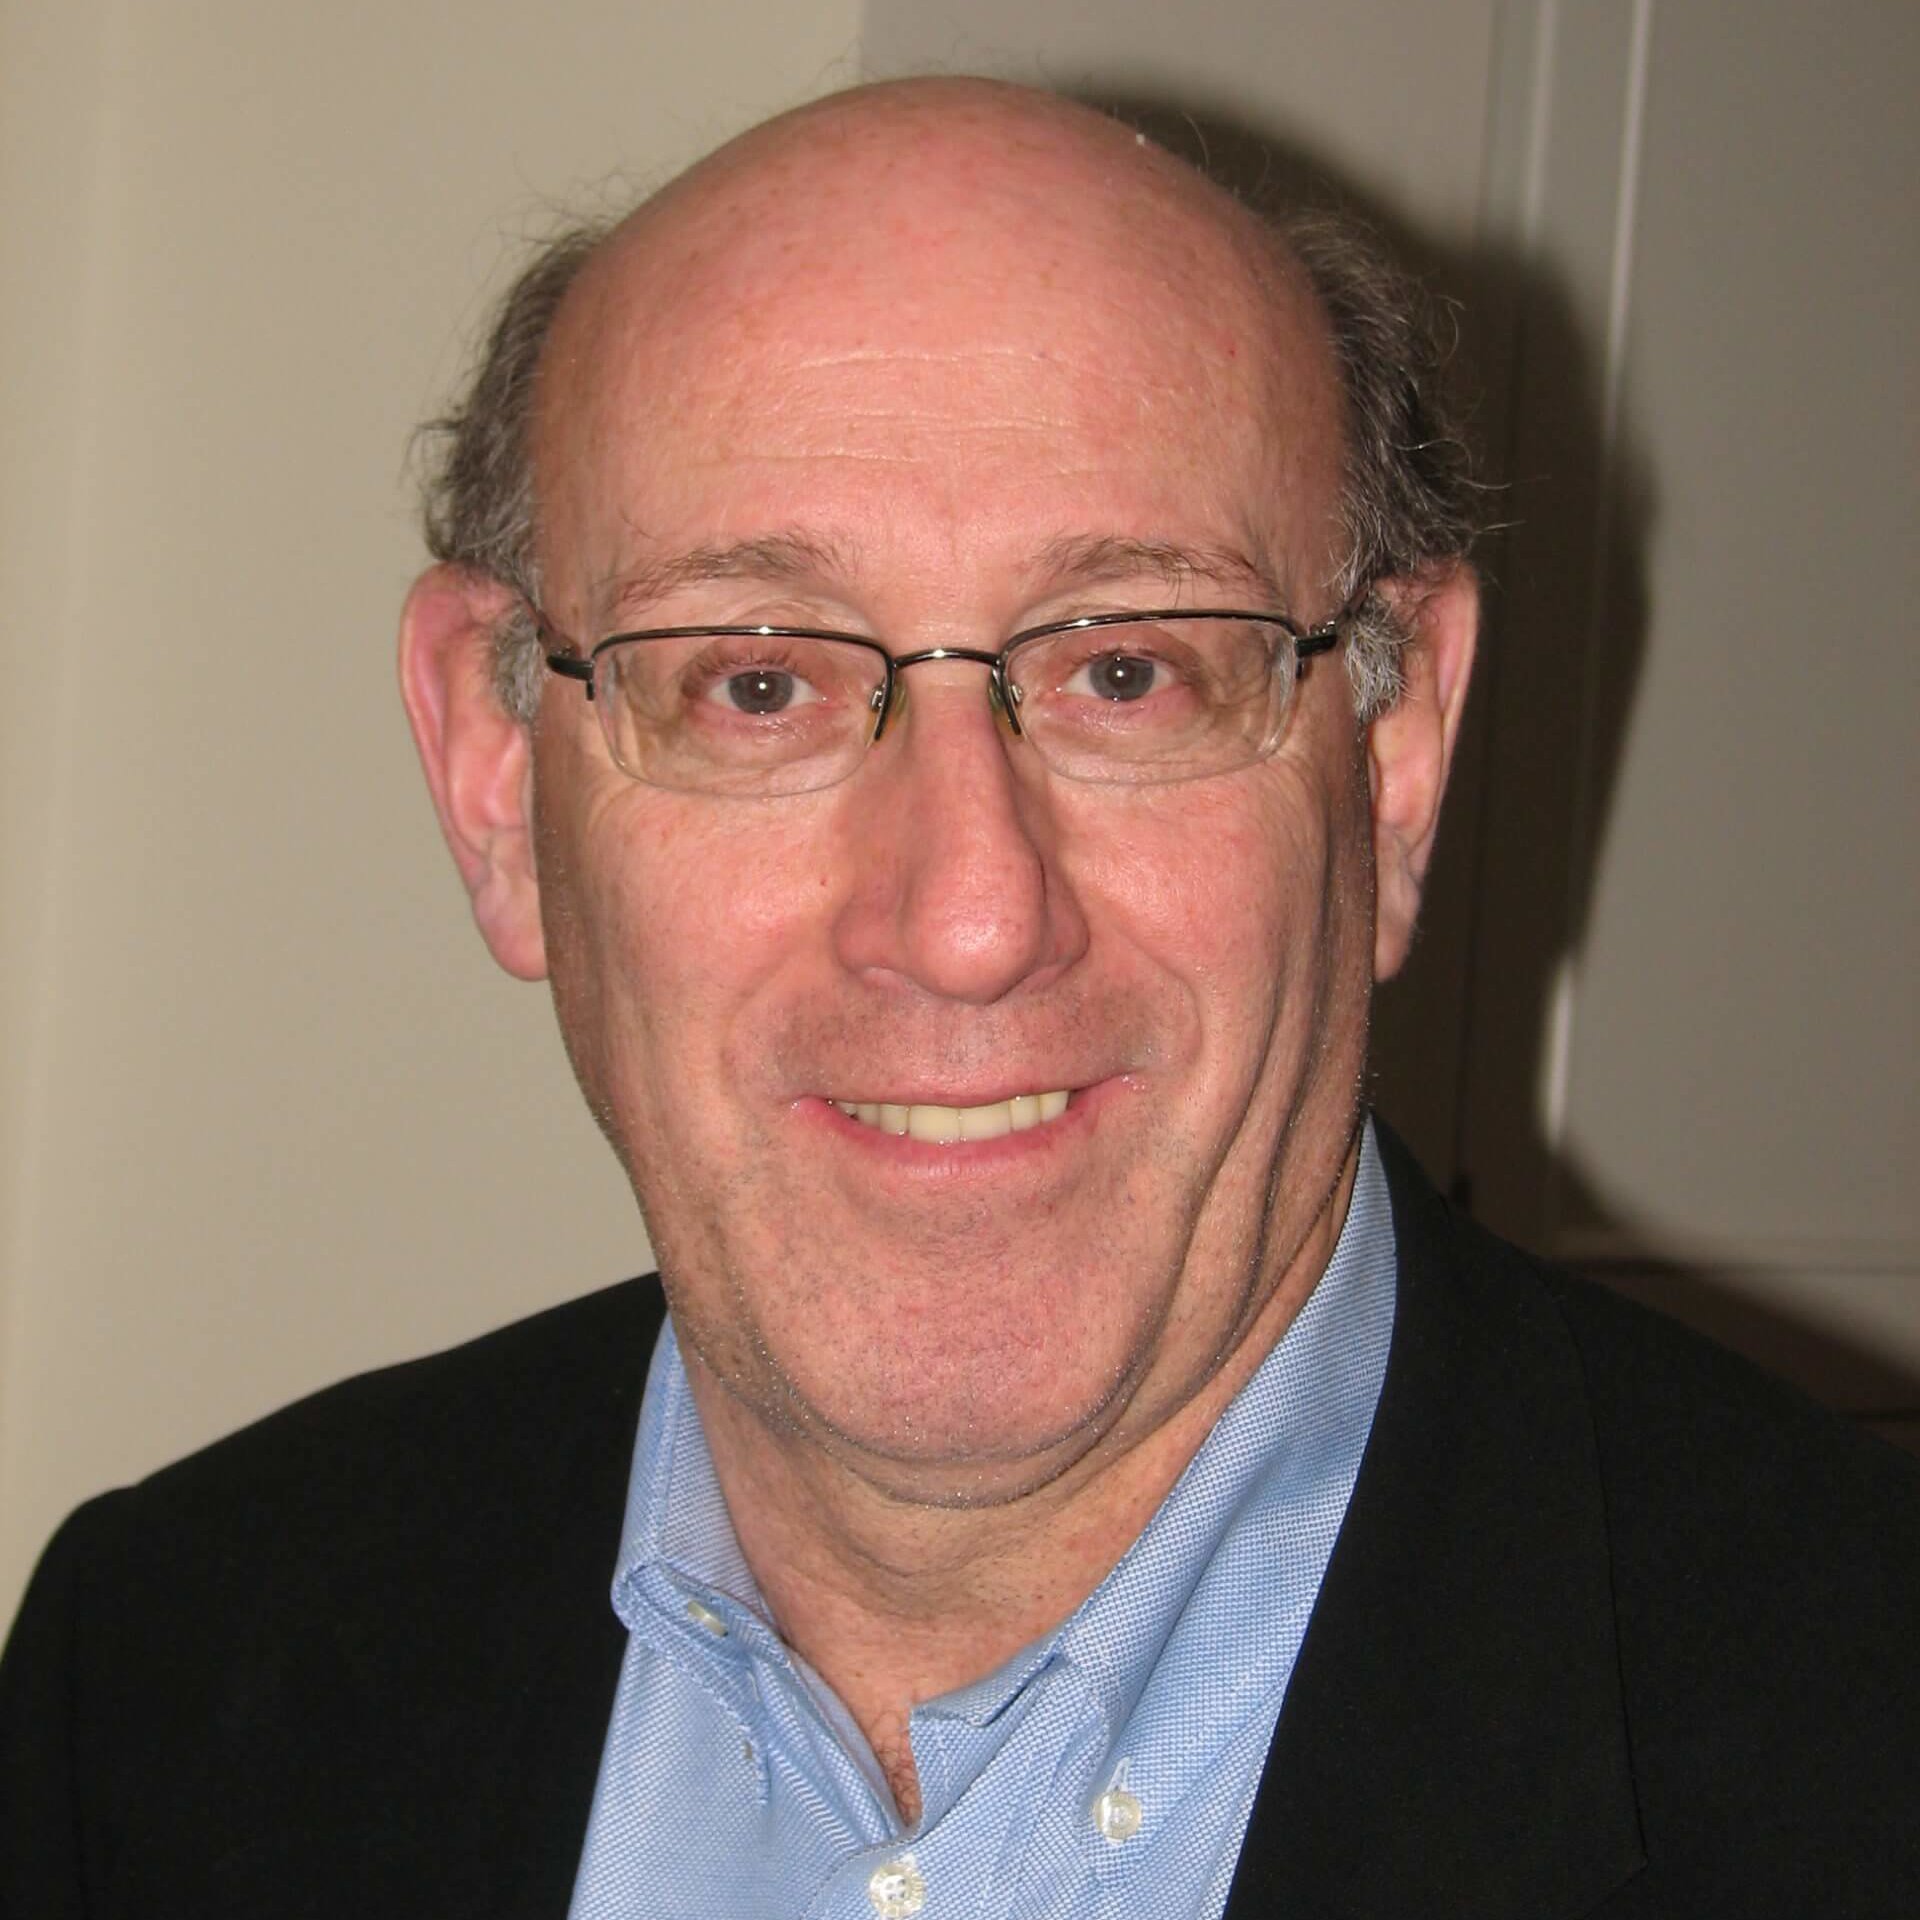 Kenneth R. Feinberg